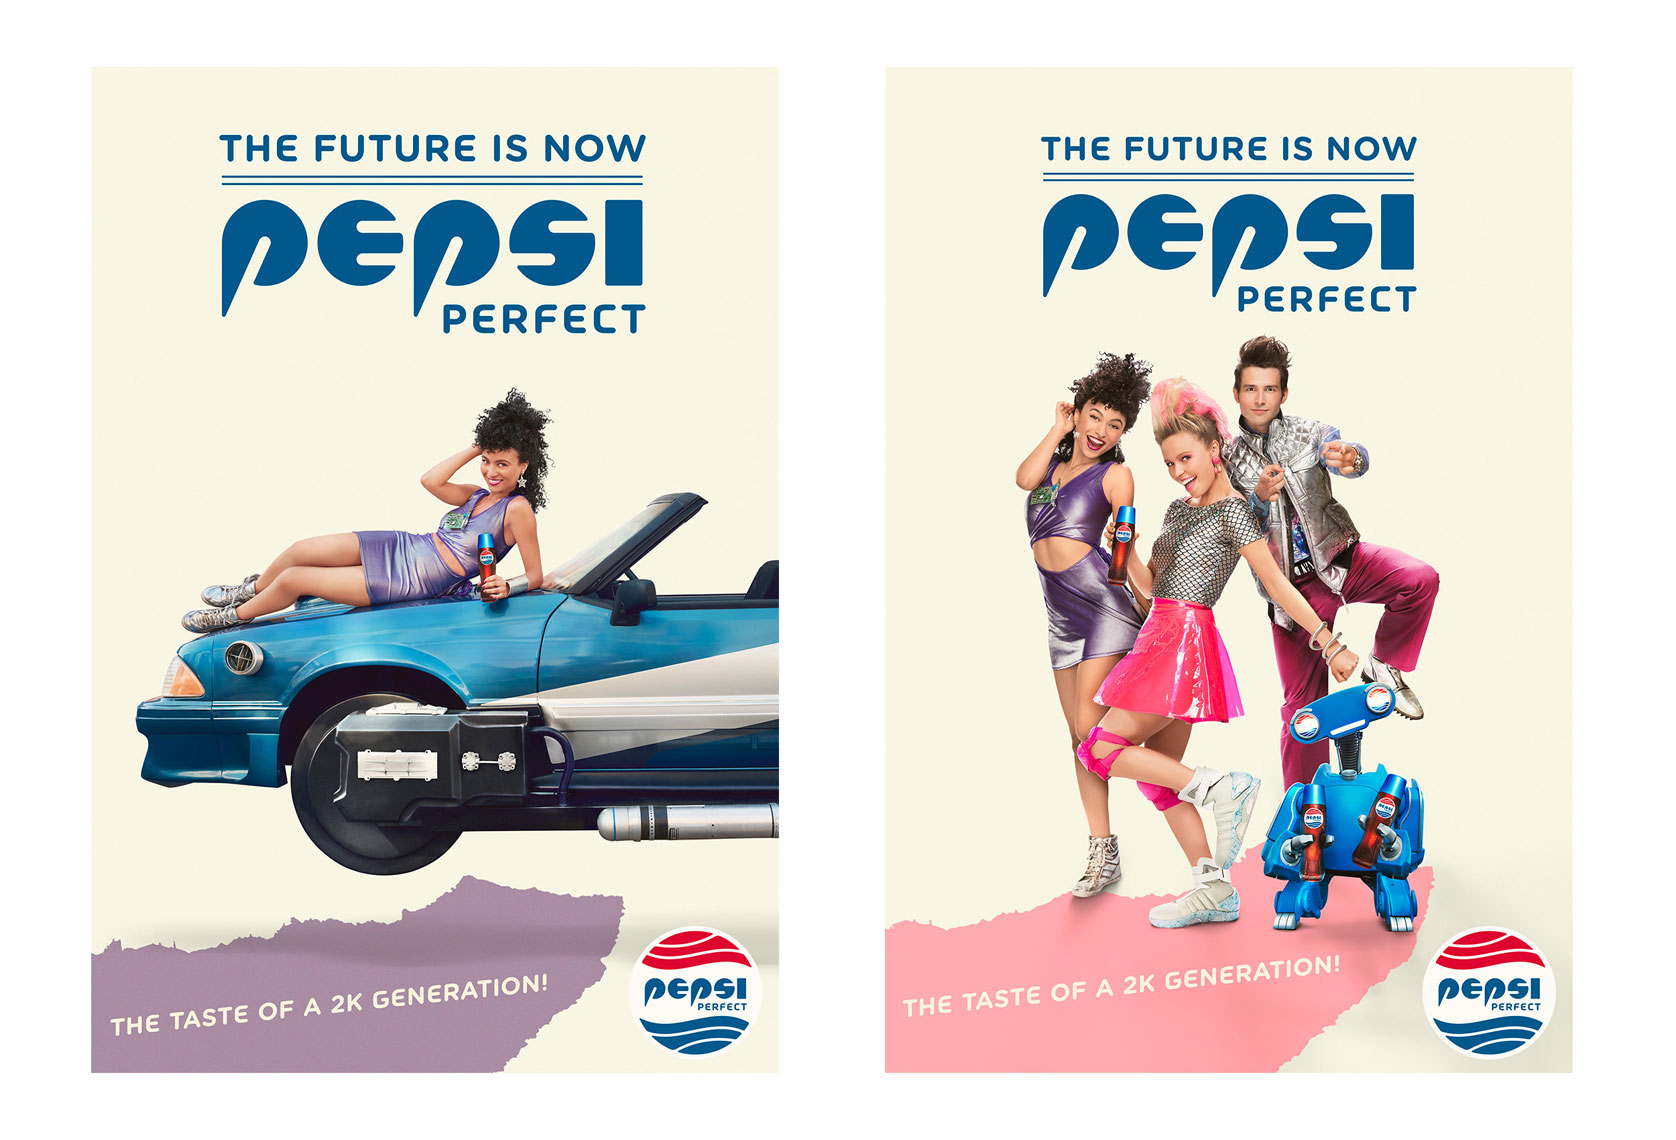 Pepsi-Perfect-BACK TO THE FUTURE